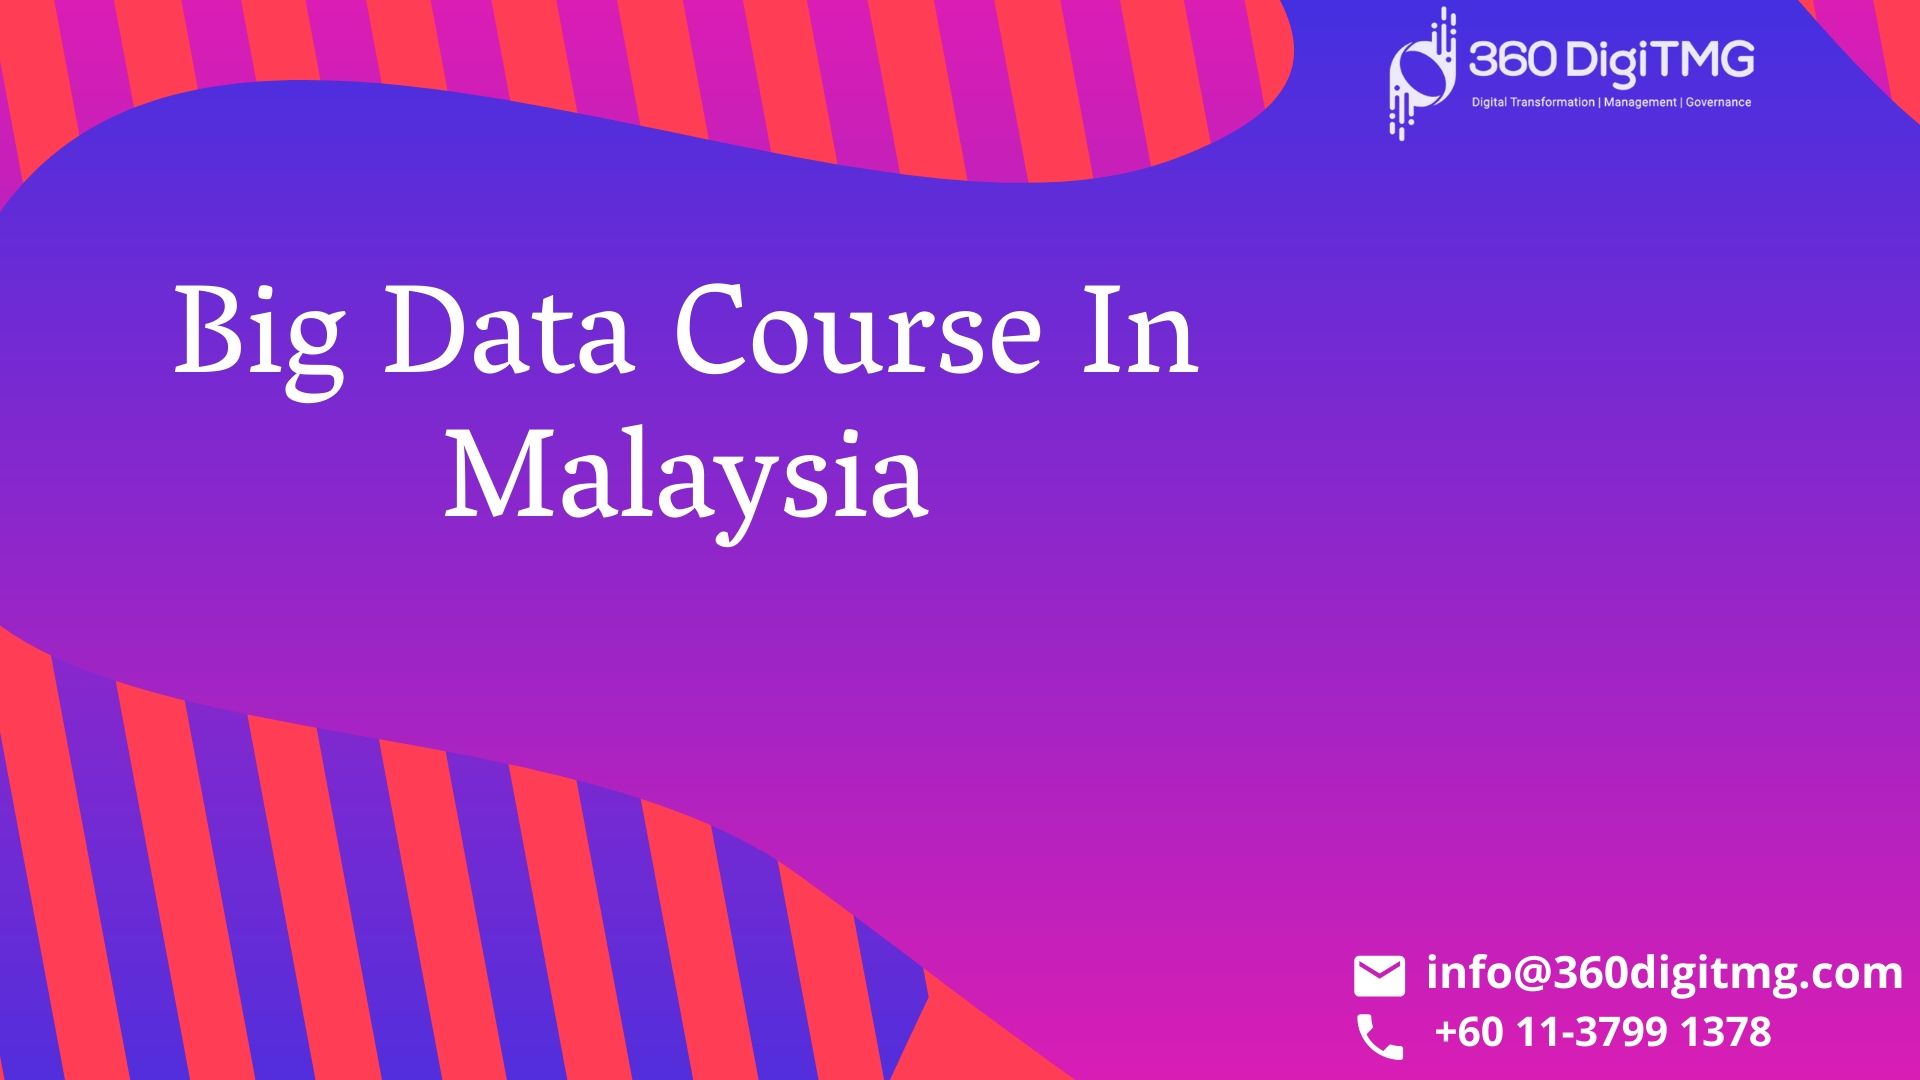 big data course in malaysia.jpg  by 360digitmg02